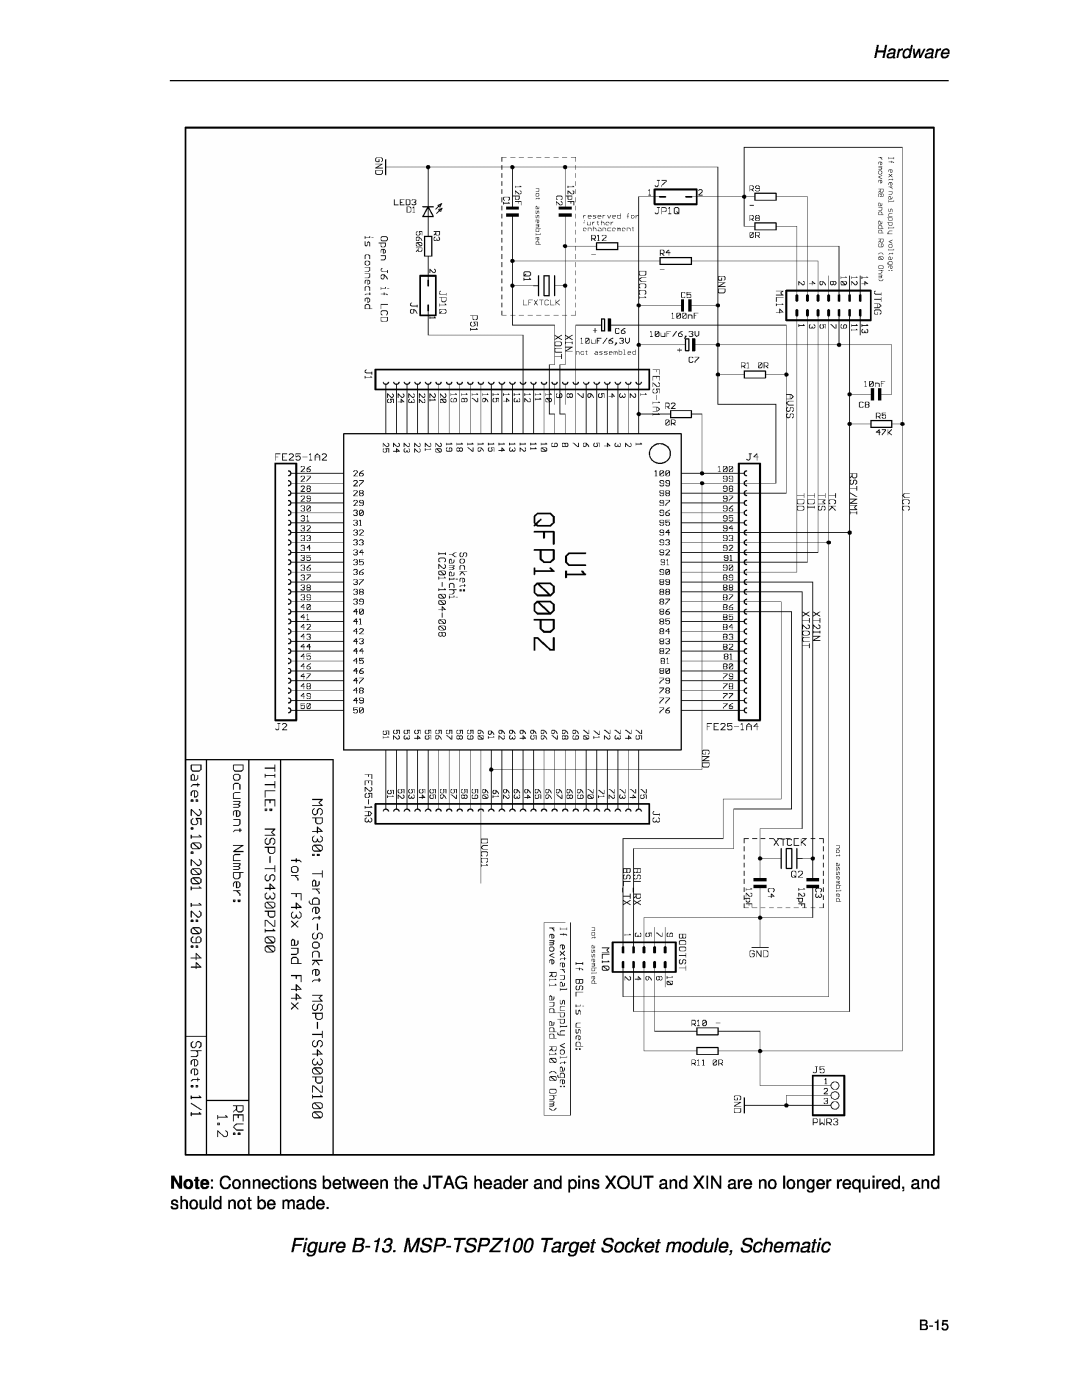 Texas Instruments MSP-FET430 manual Figure B-13. MSP-TSPZ100 Target Socket module, Schematic, Hardware, B-15 